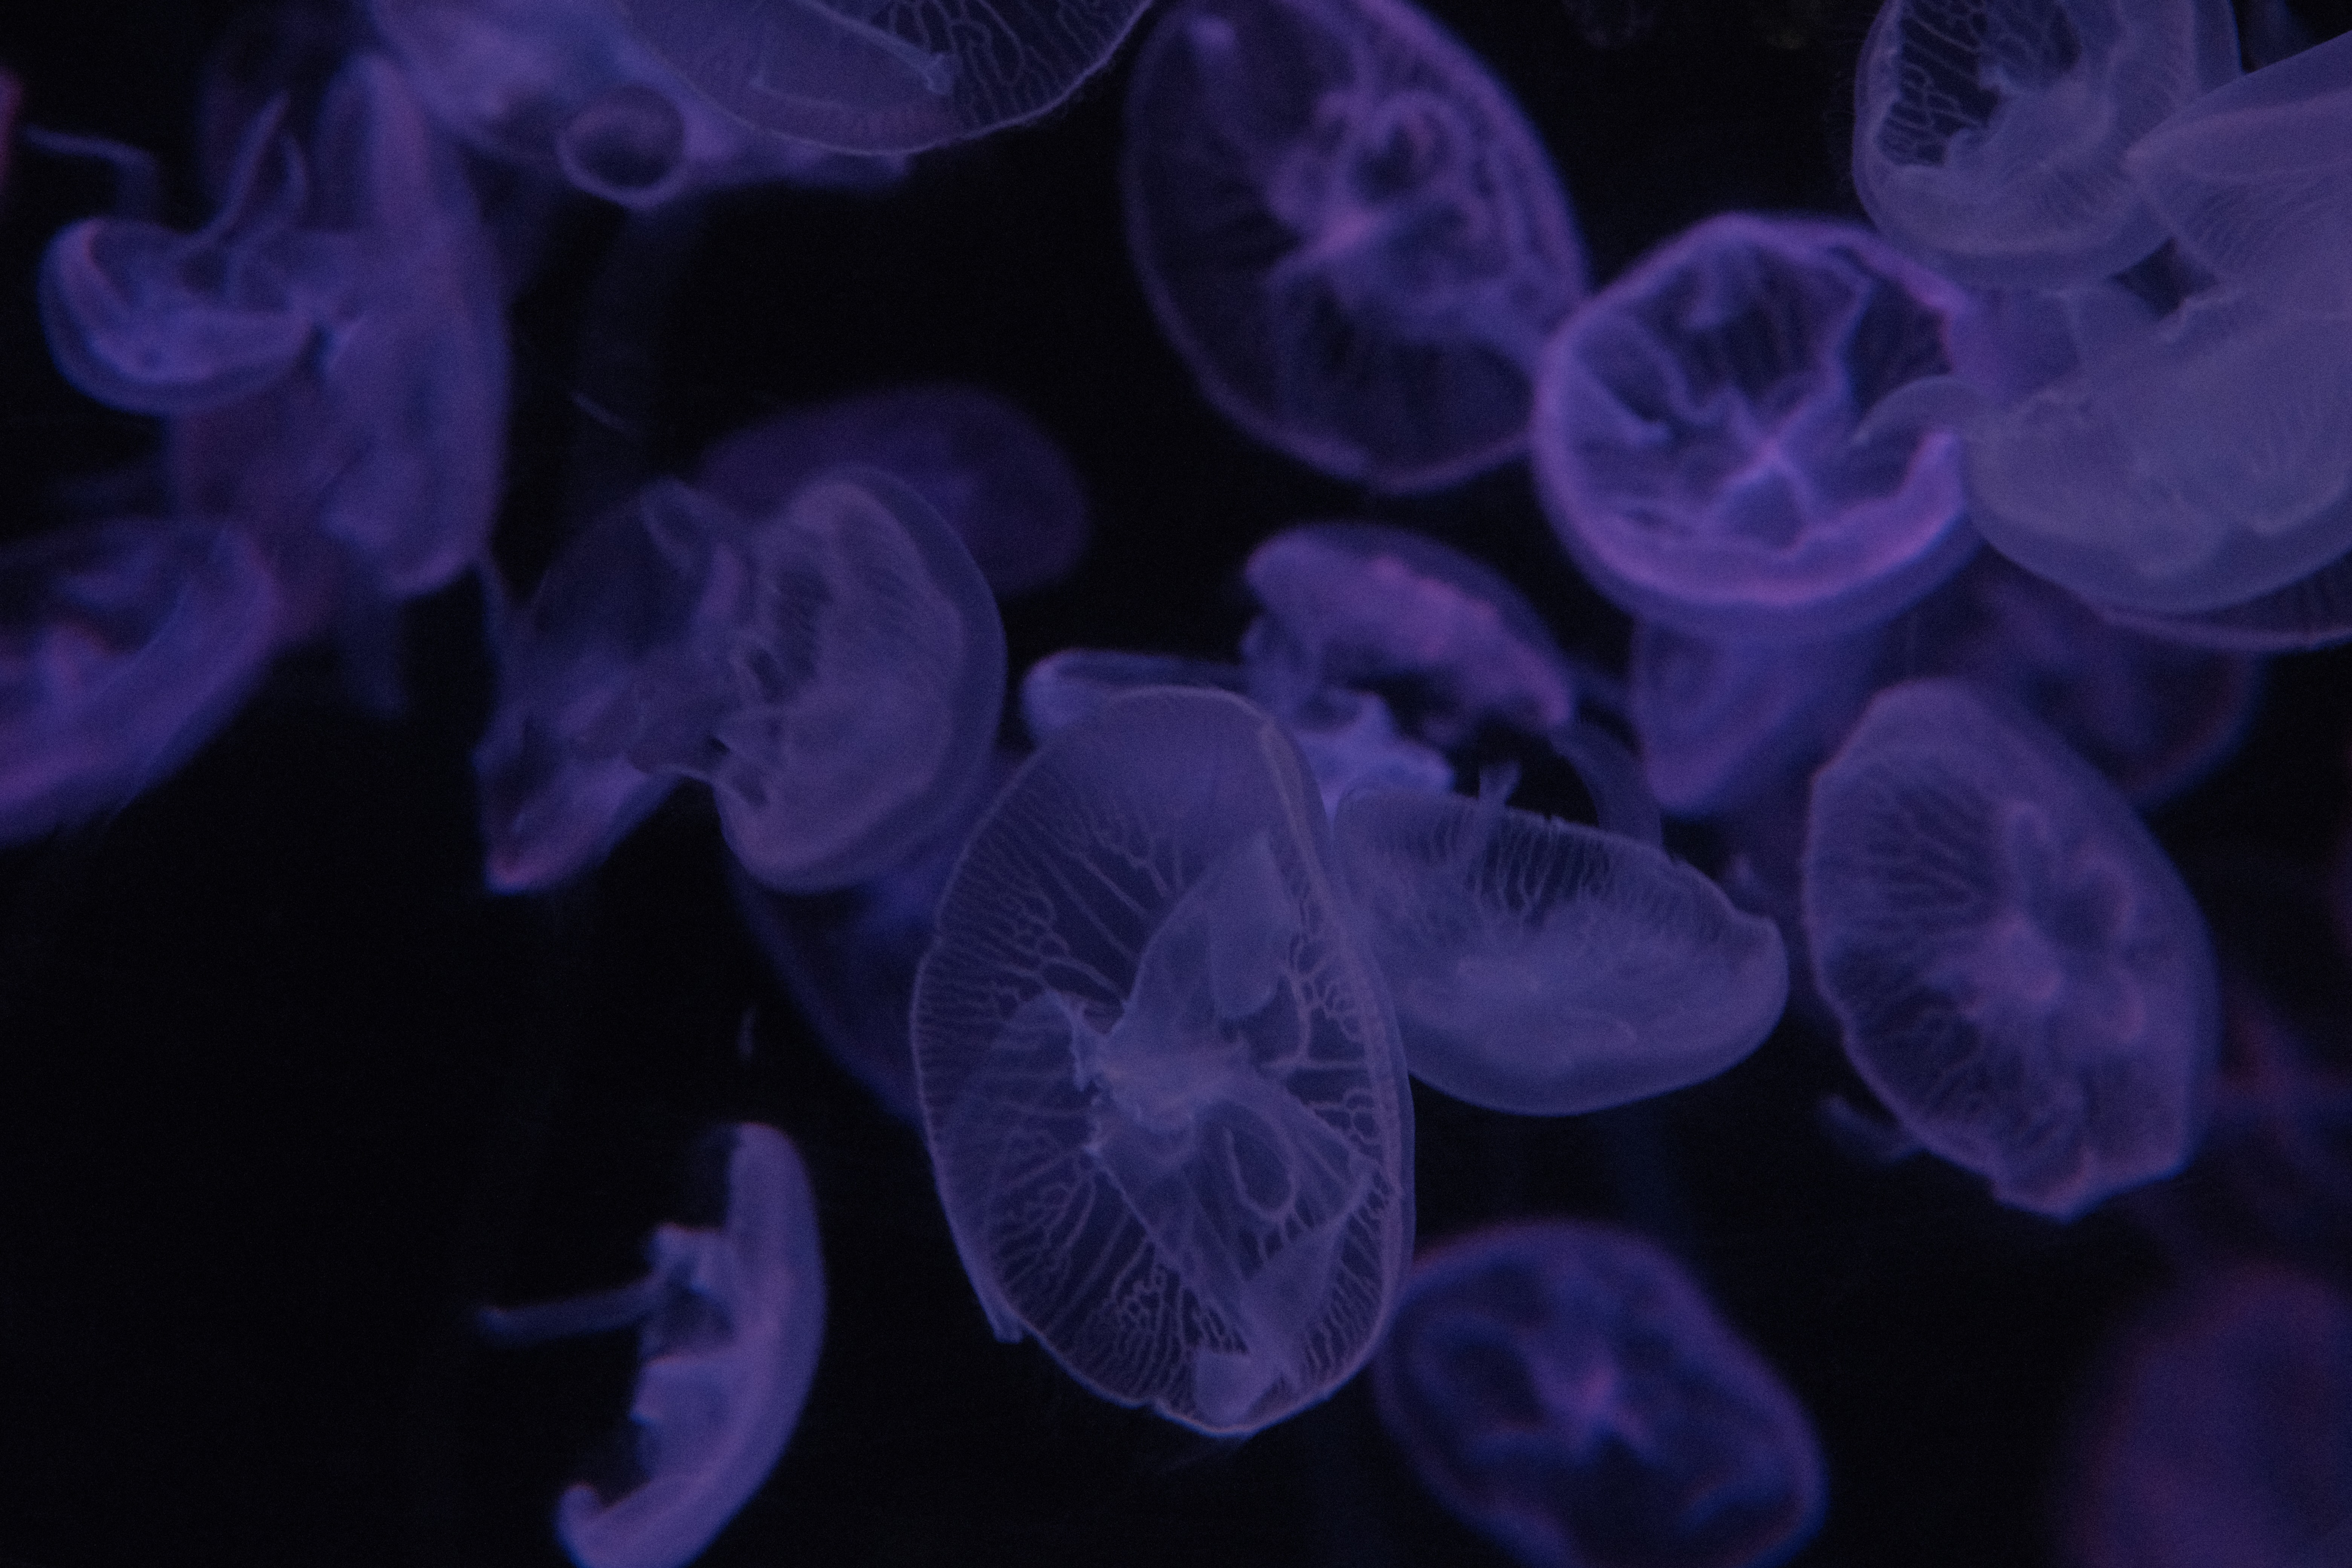 jellyfish, violet, dark, purple, handsomely, it's beautiful Image for desktop